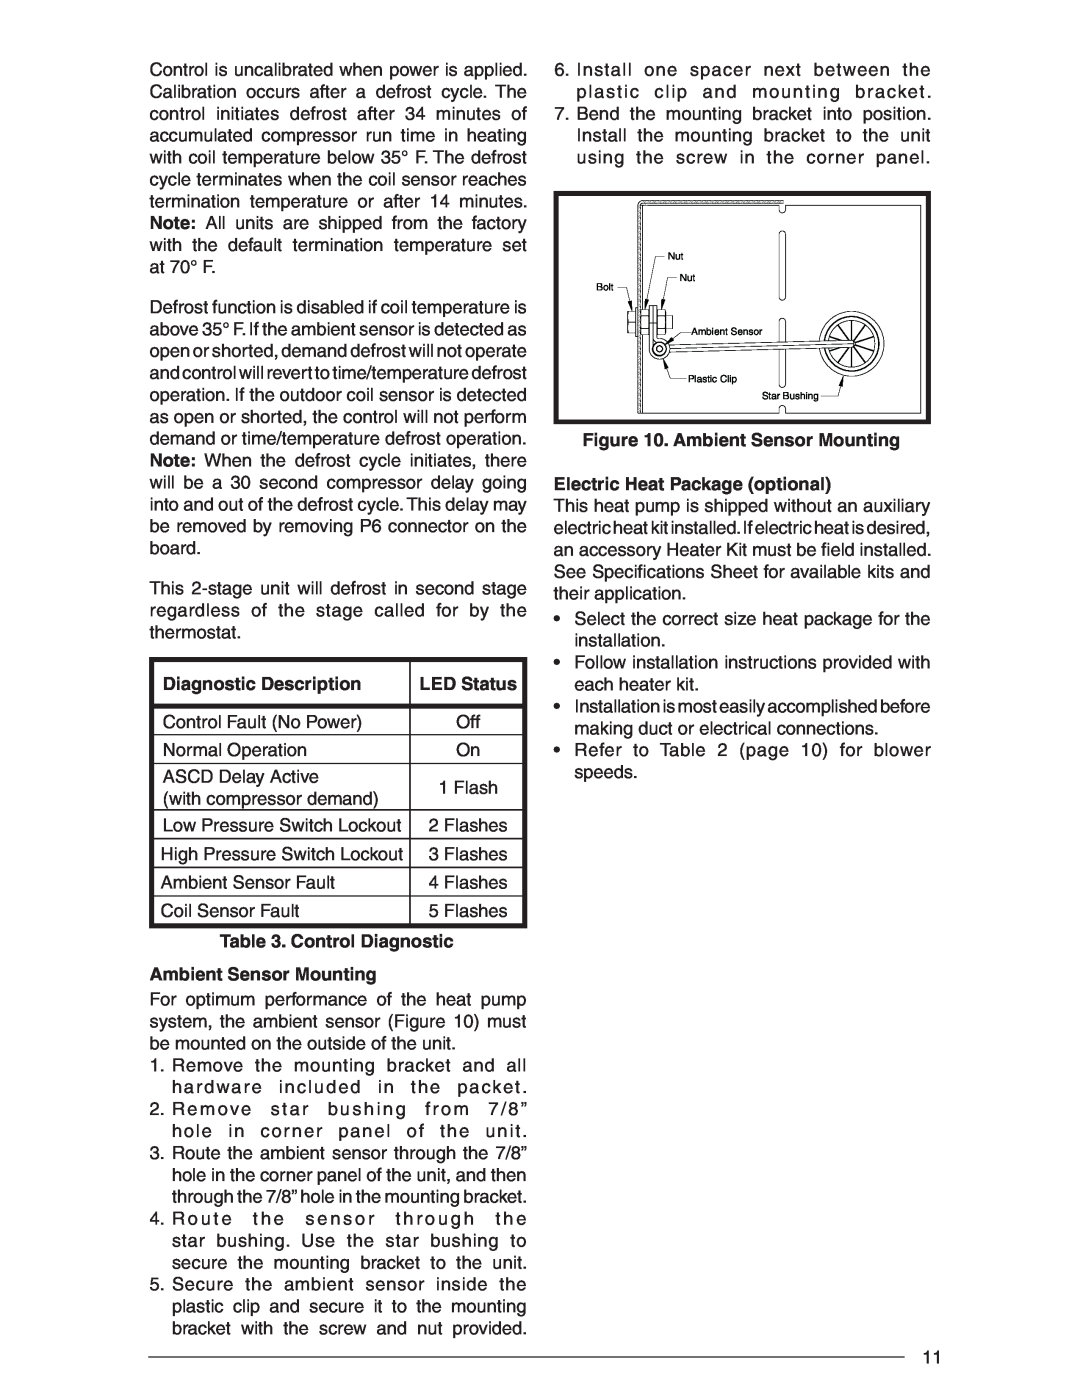 Nordyne R-410A user manual Diagnostic Description, LED Status, Control Diagnostic, Ambient Sensor Mounting 